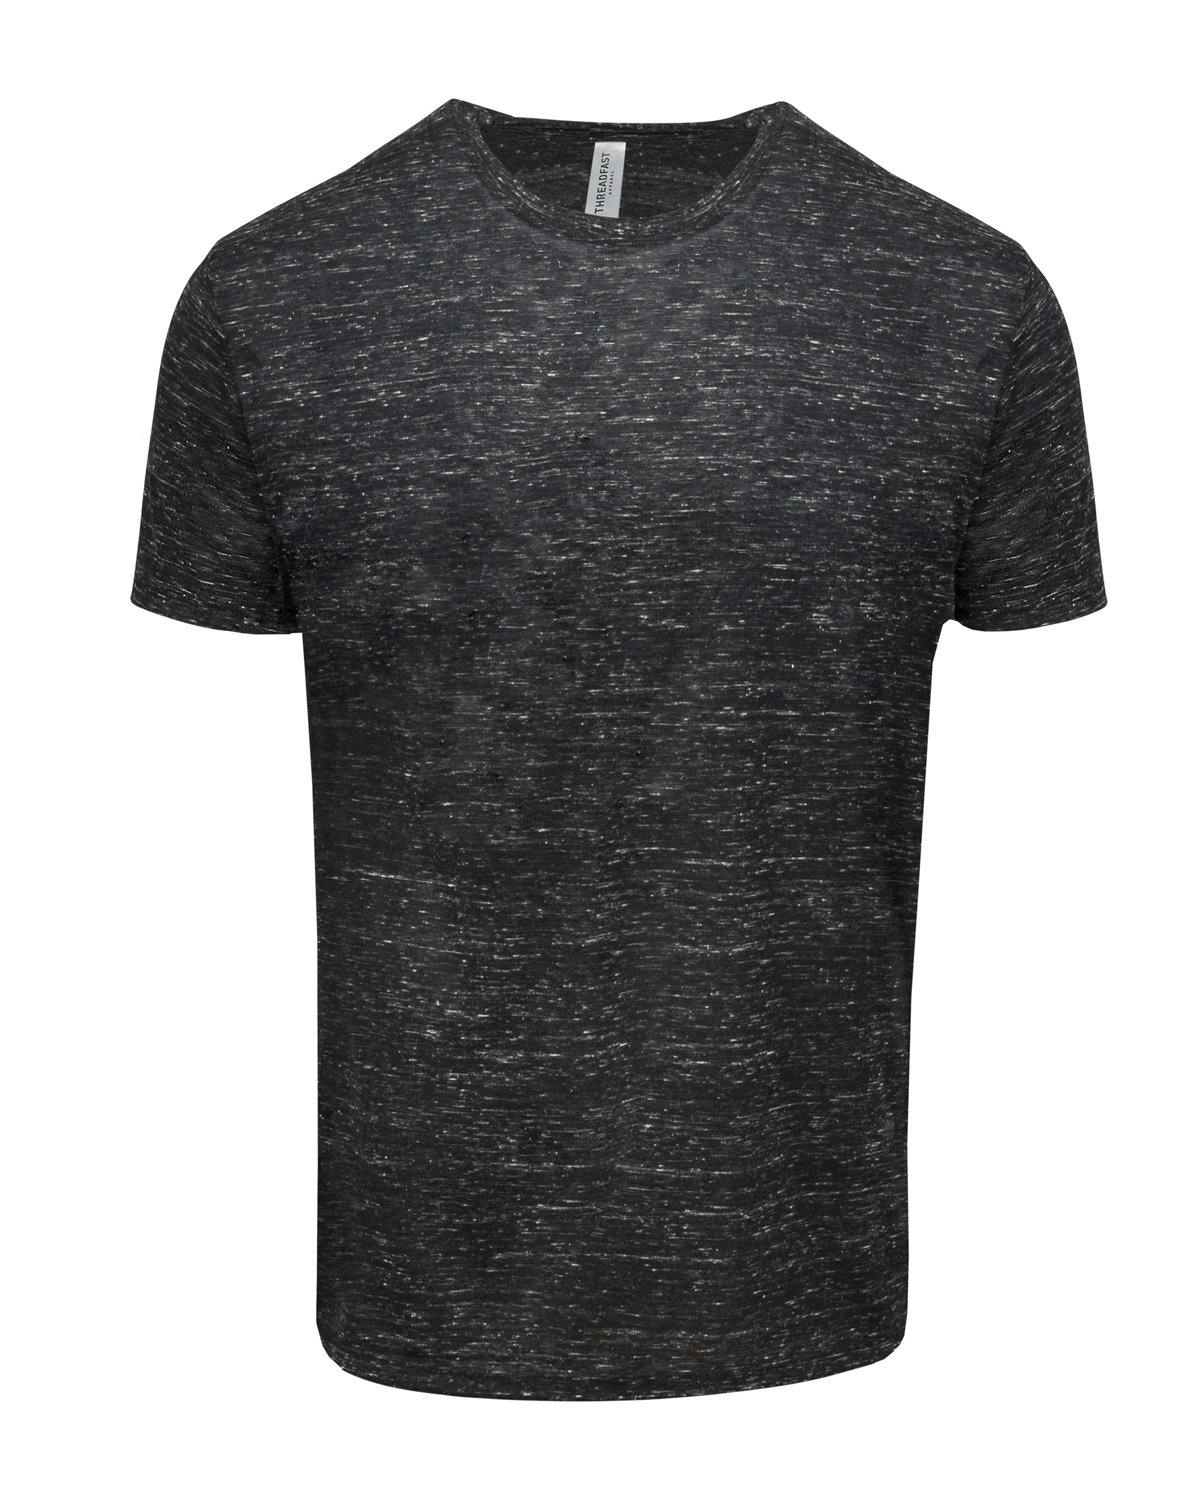 Image for Men's Blizzard Jersey Short-Sleeve T-Shirt